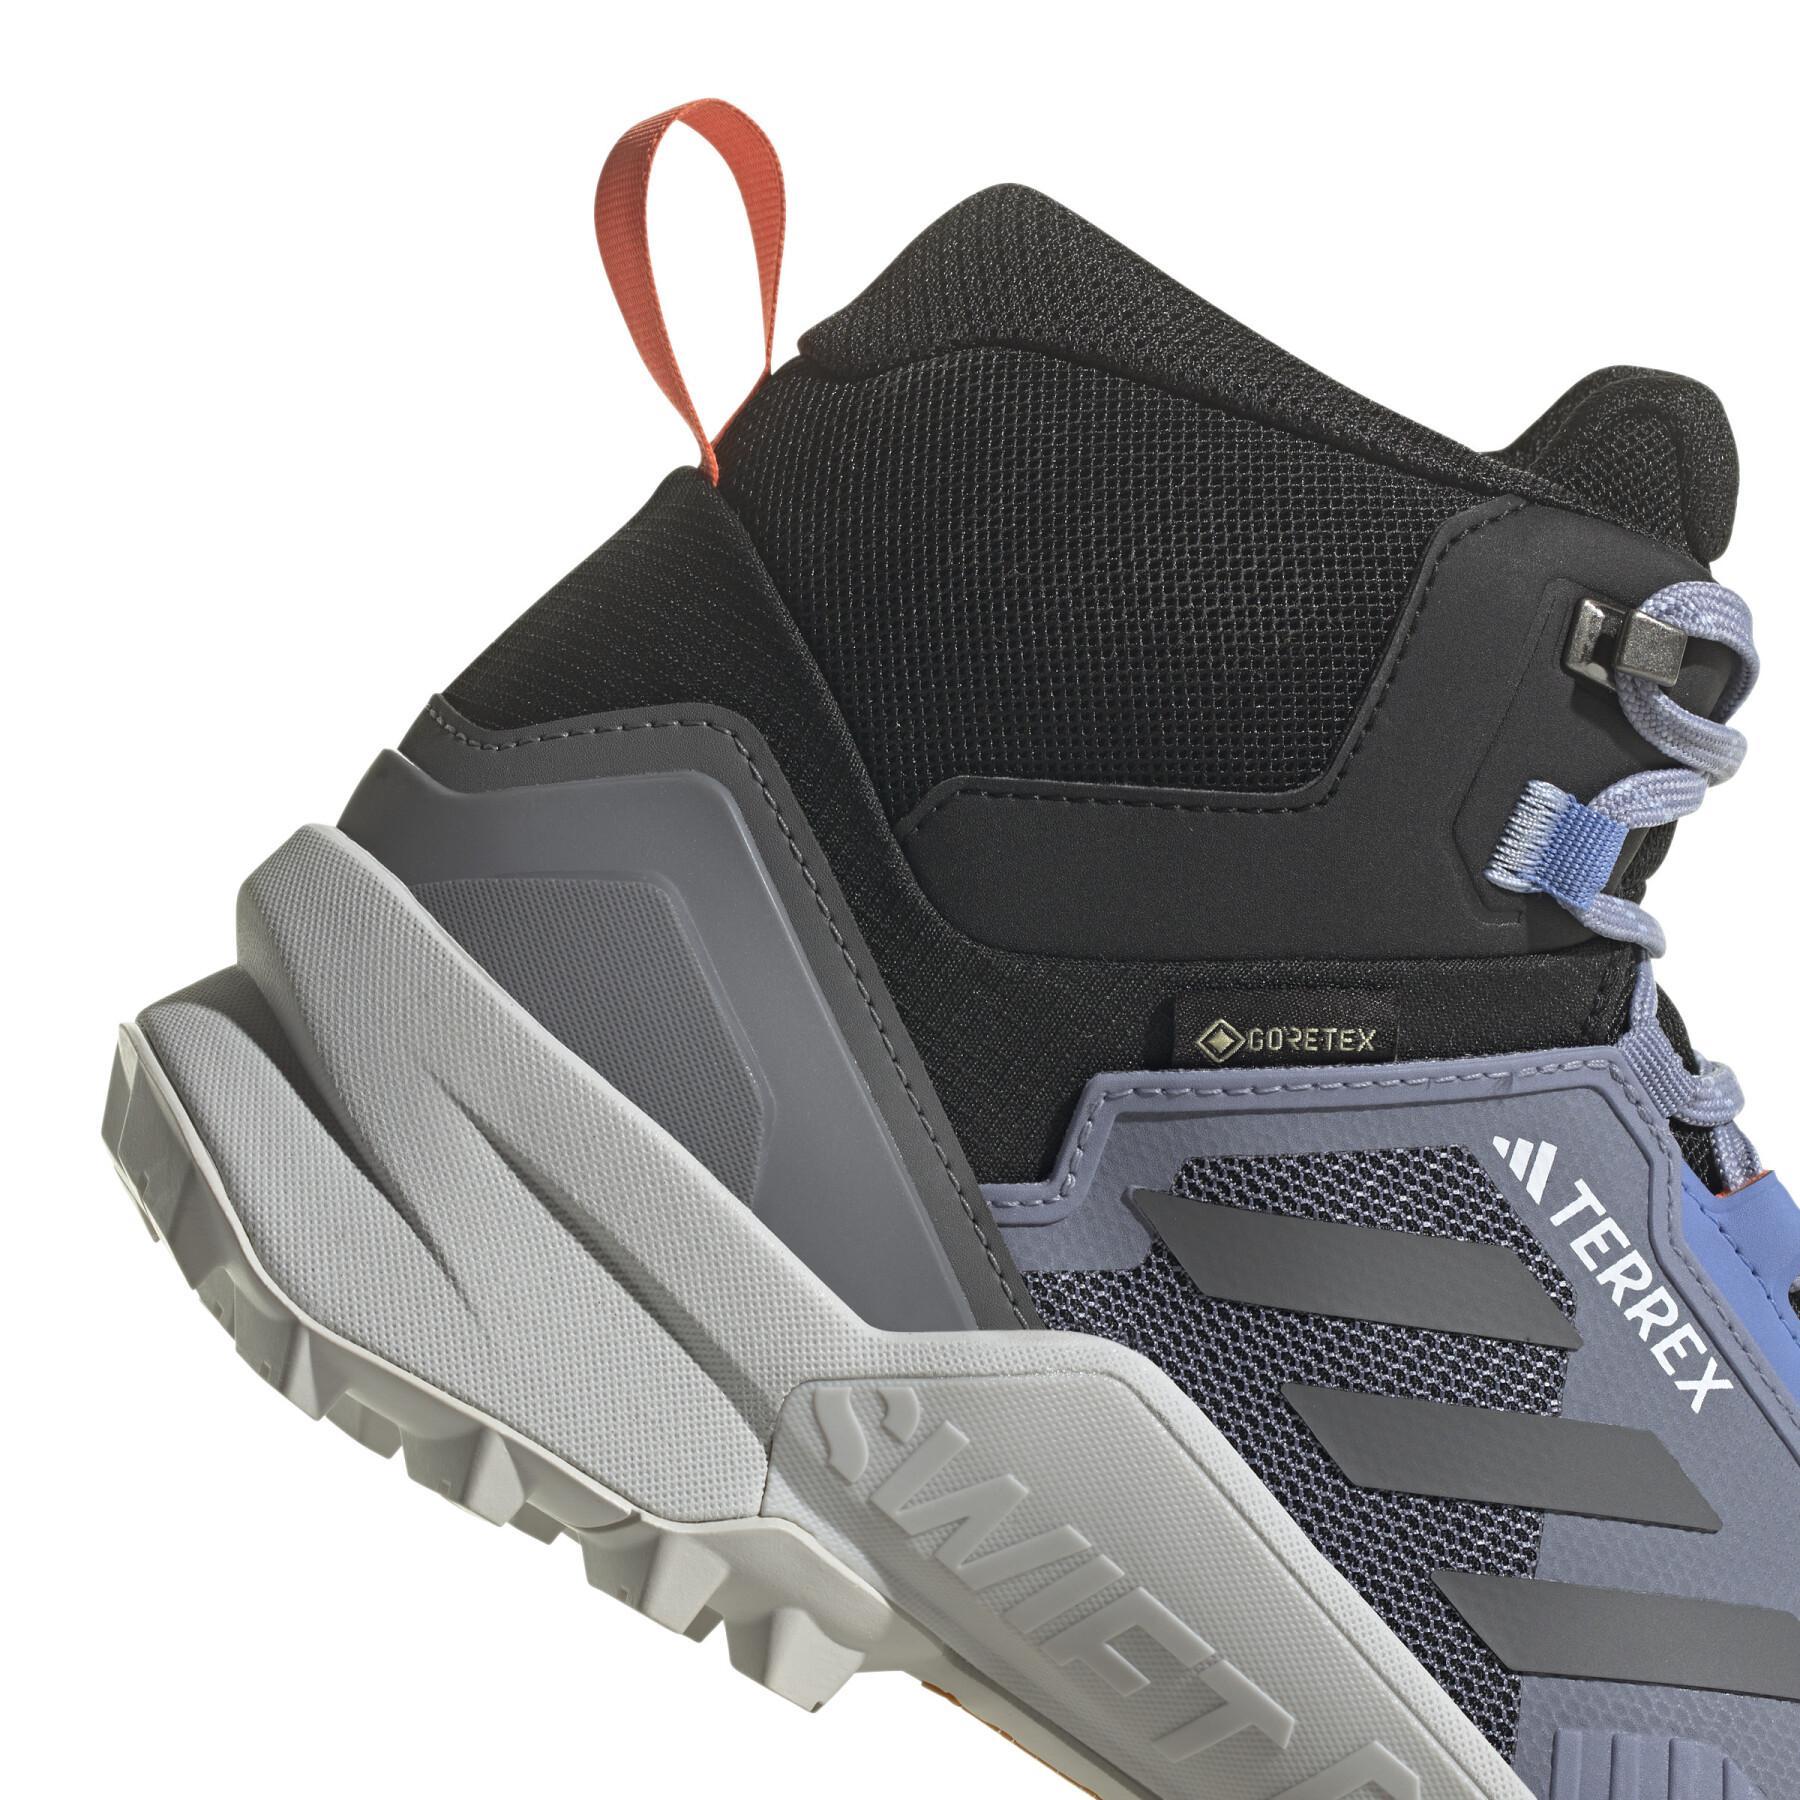 Hiking shoes adidas Terrex Swift R3 Mid GORE-TEX